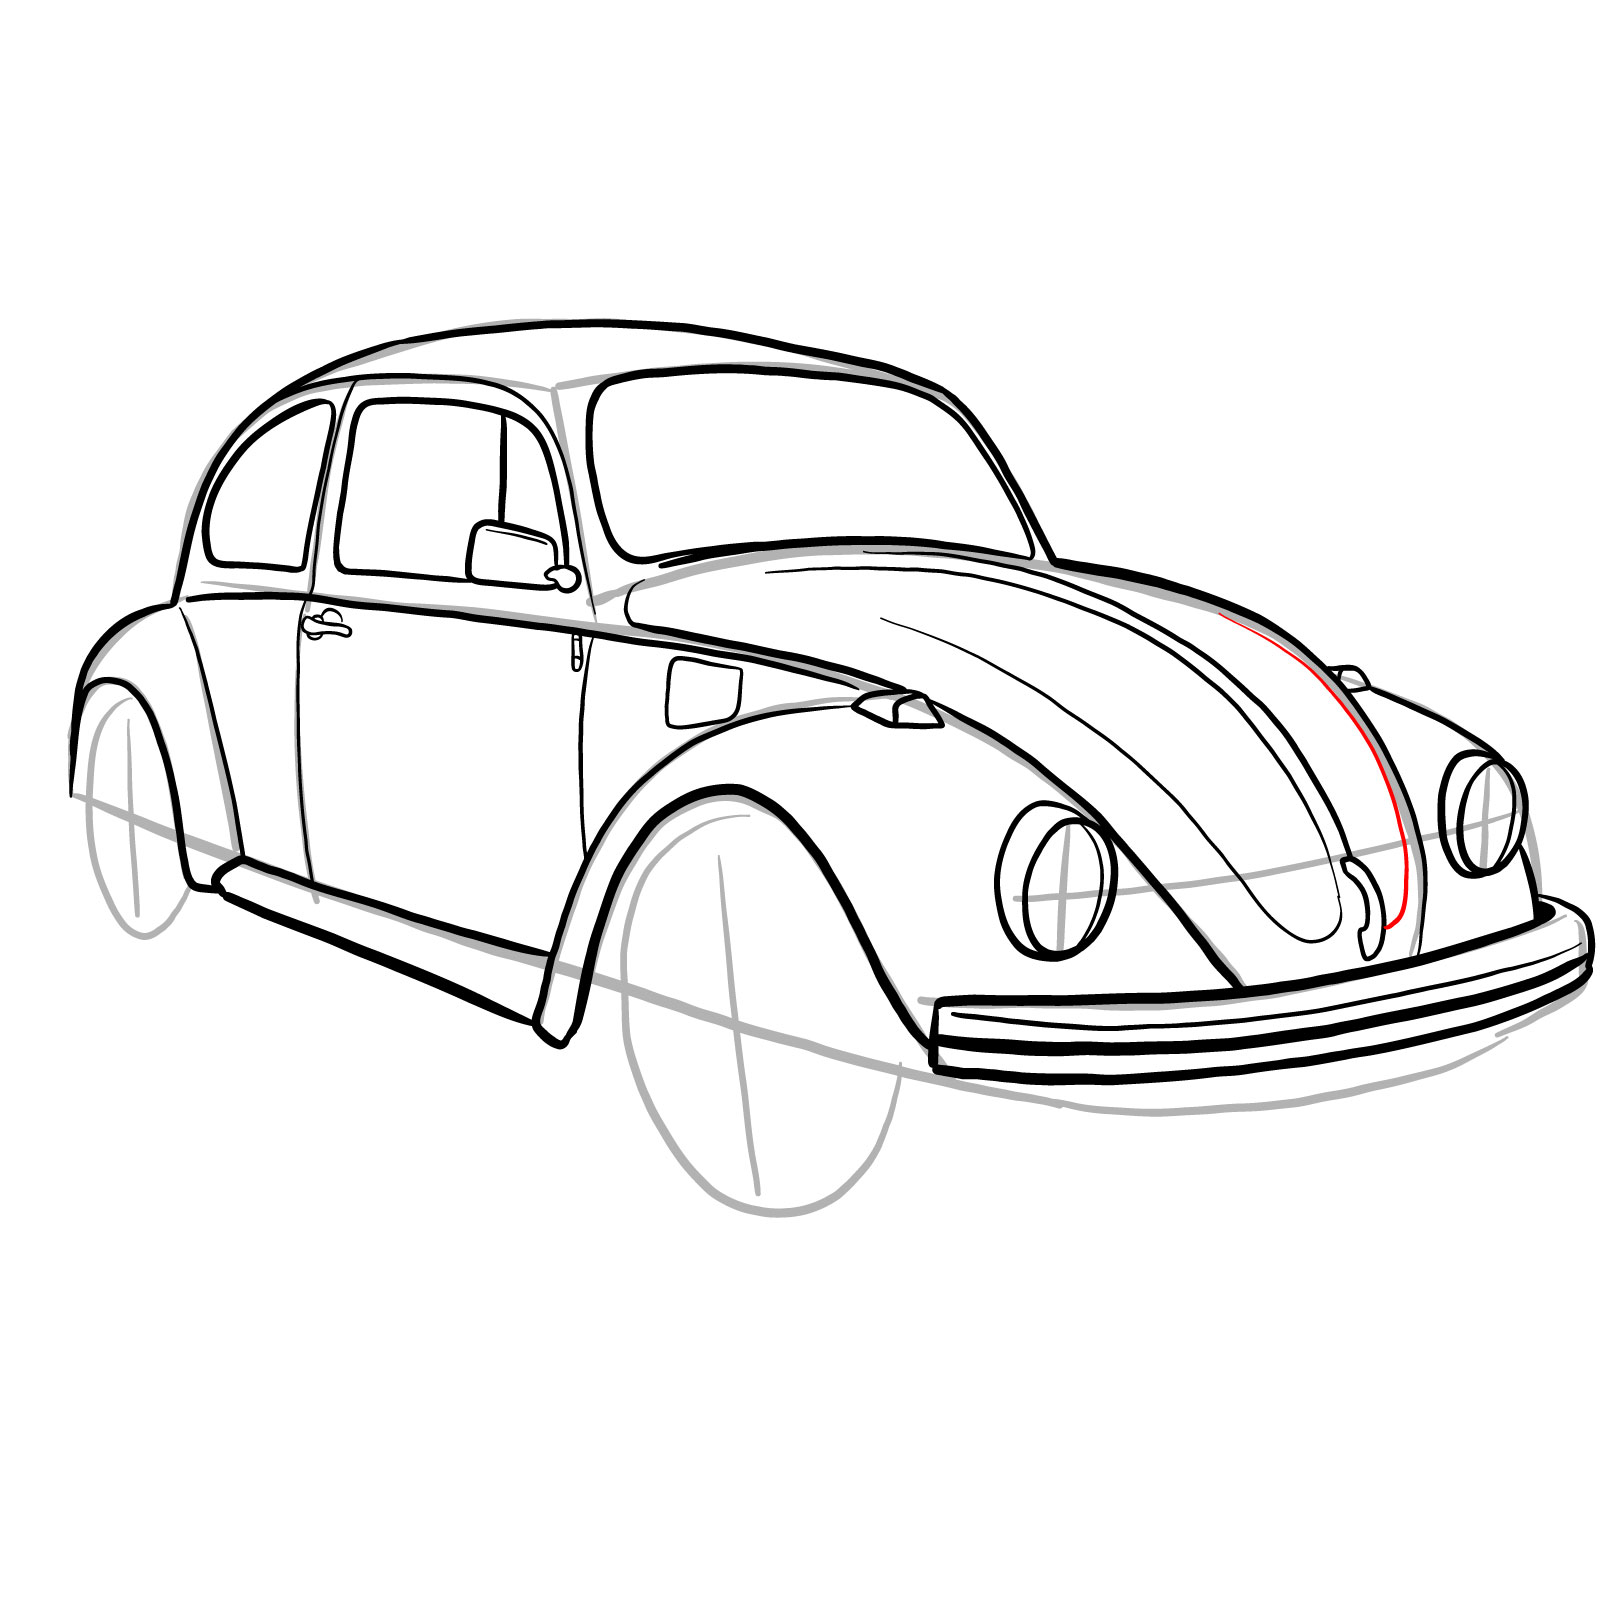 How to draw Volkswagen Beetle 1972 - step 26